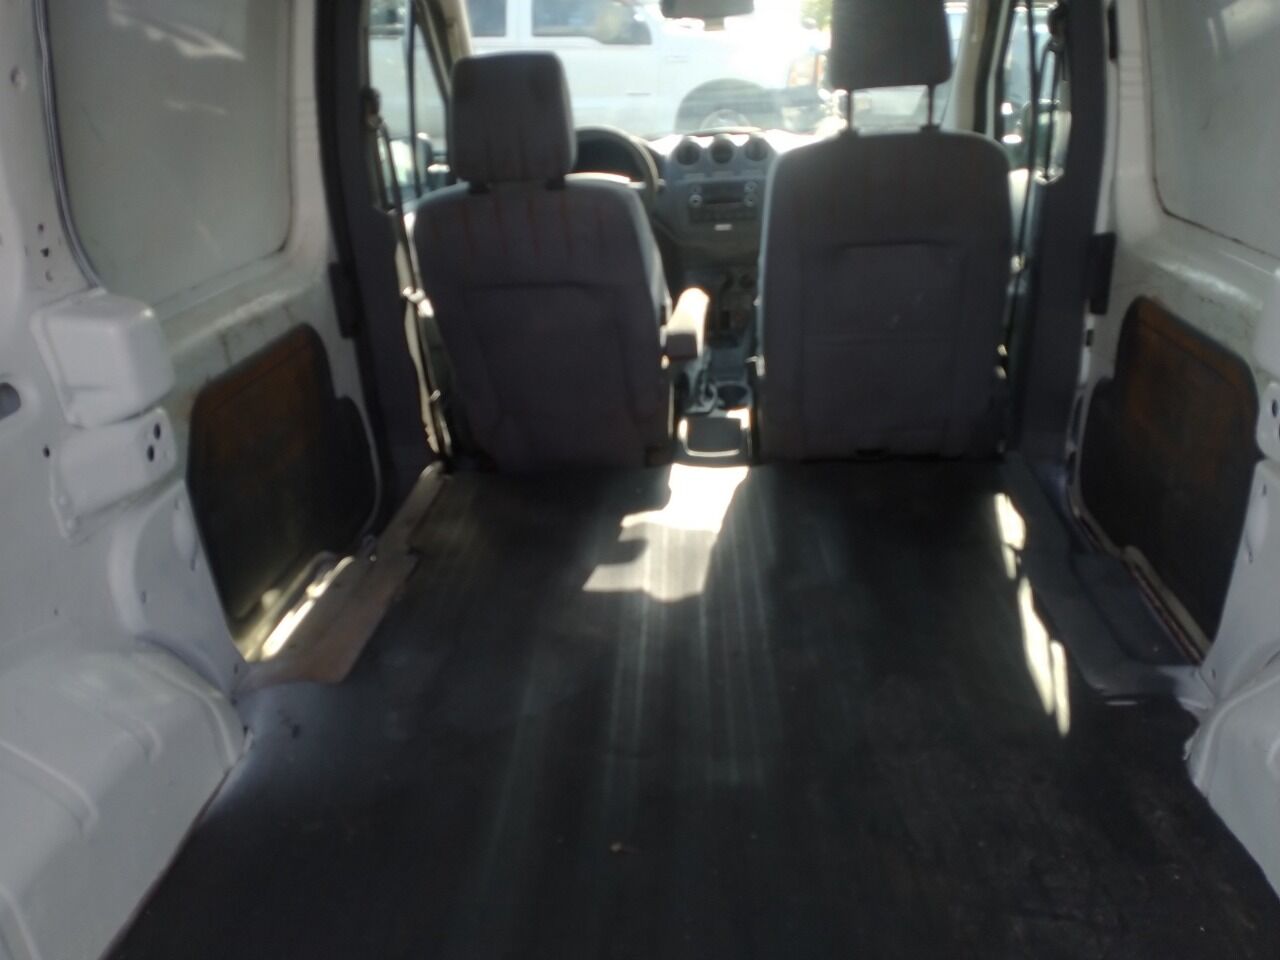 2013 Ford Transit Connect Van - $5,950